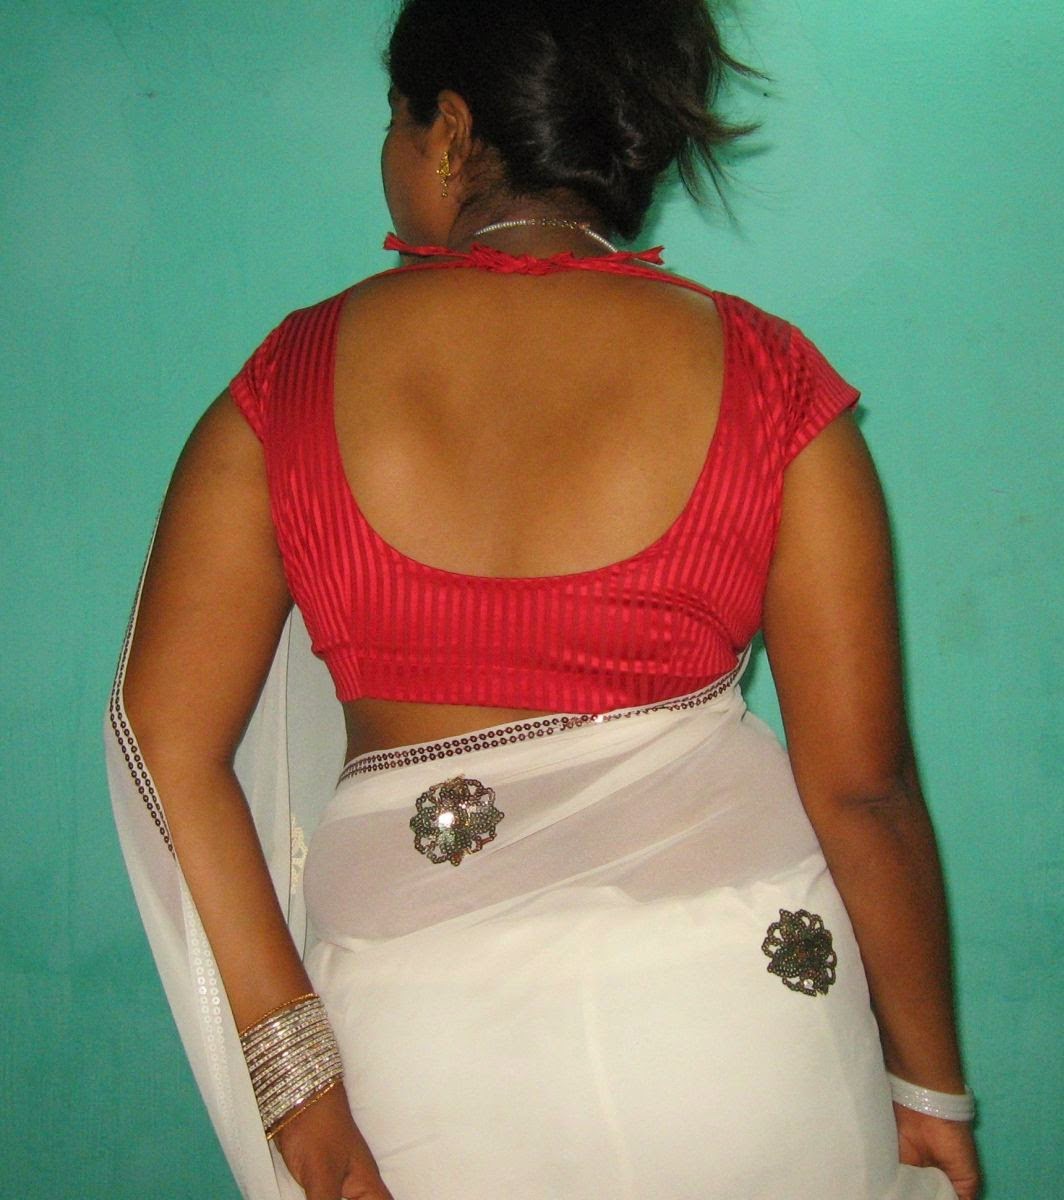 Desi aunty sexy back image